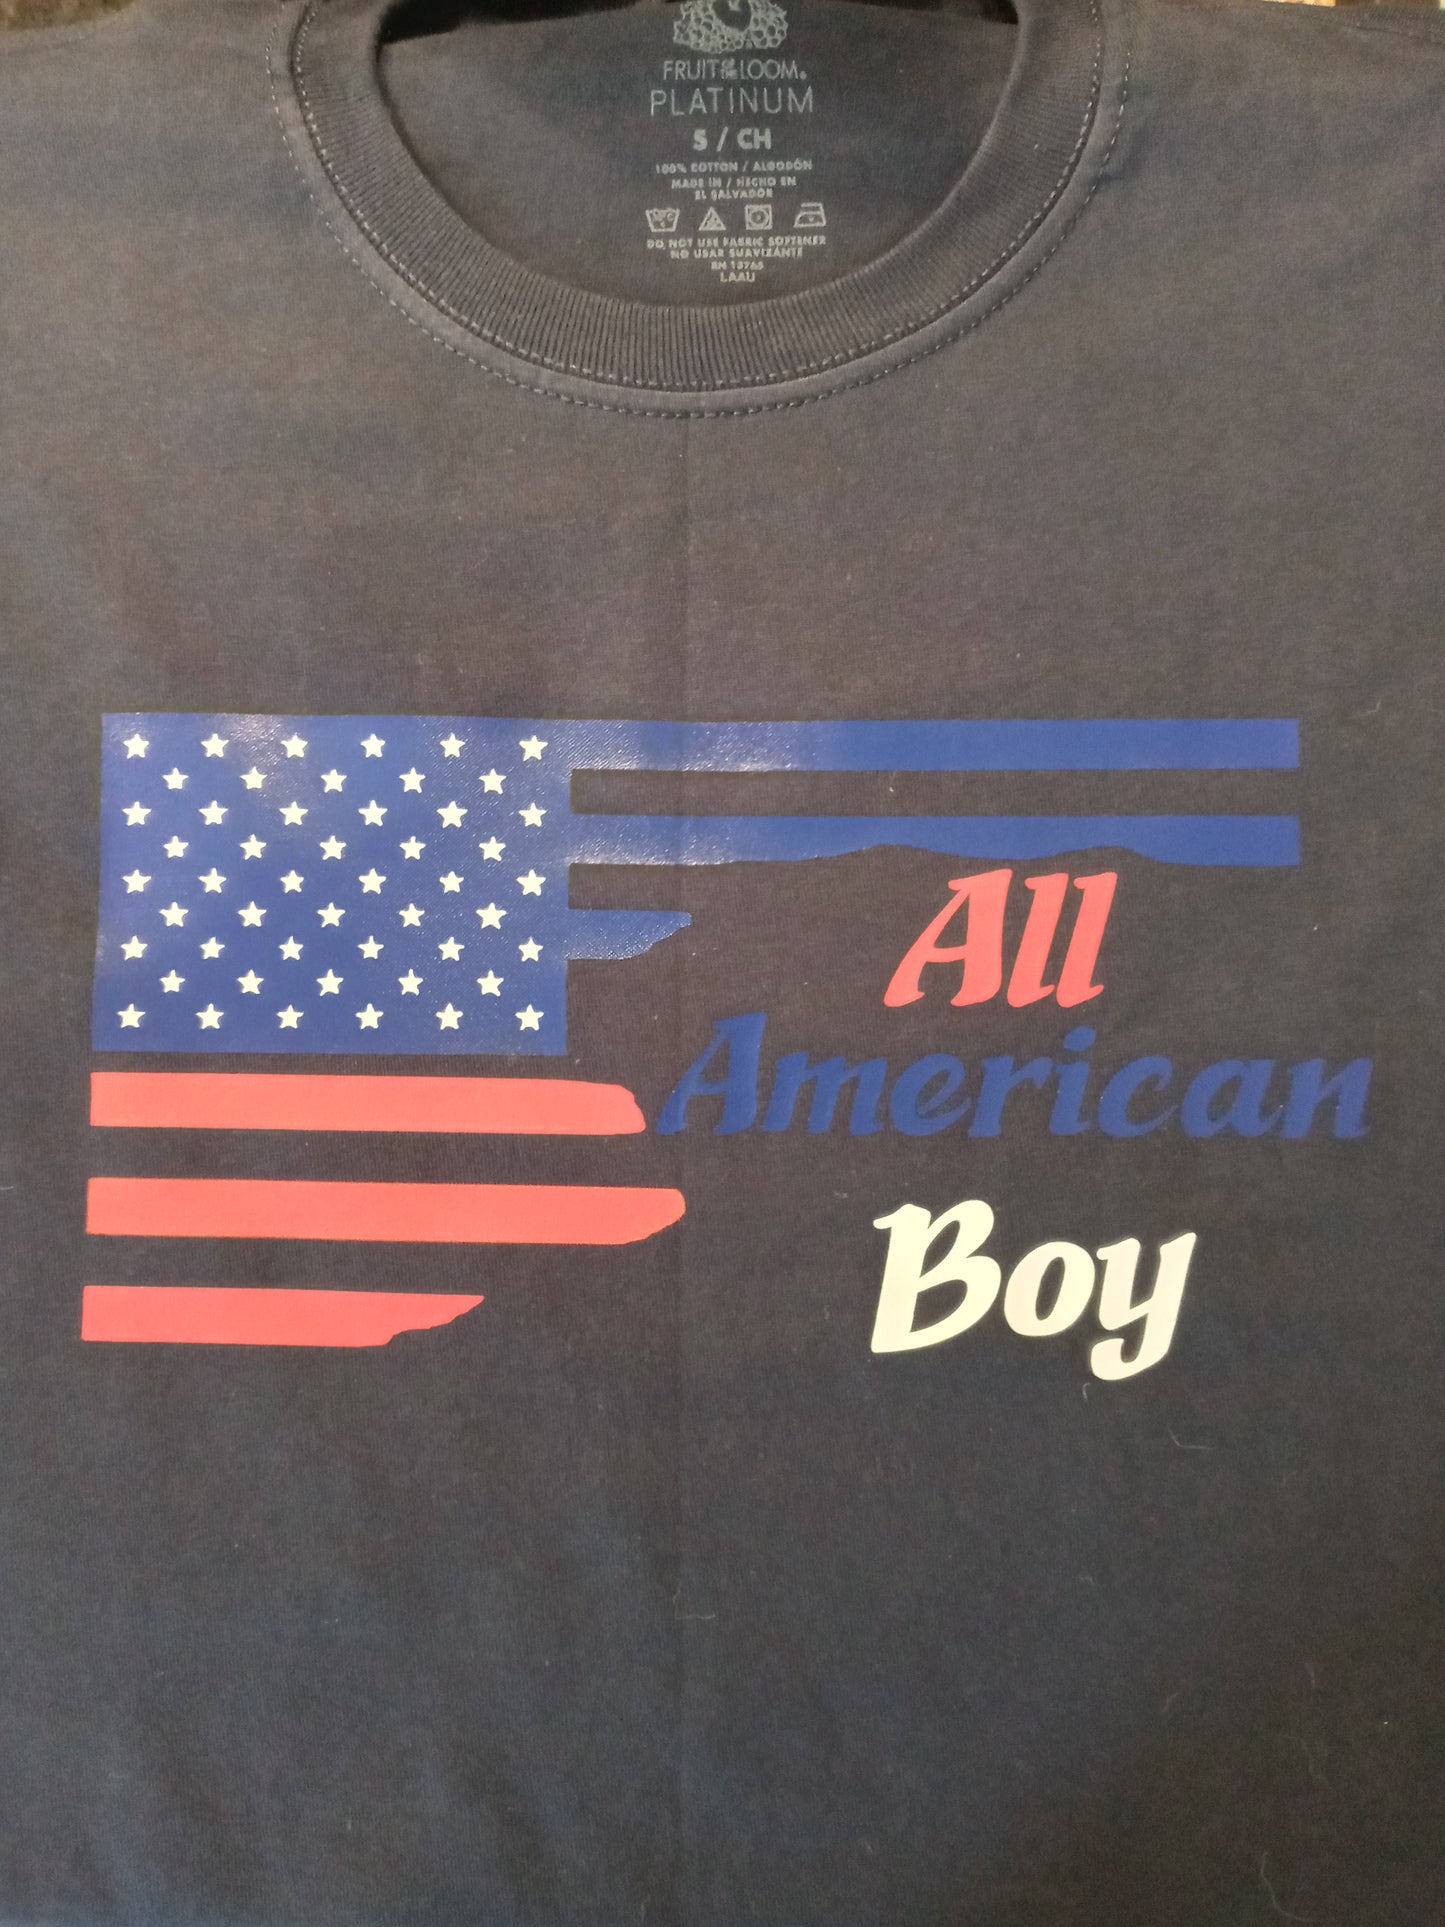 All American Boy Shirt